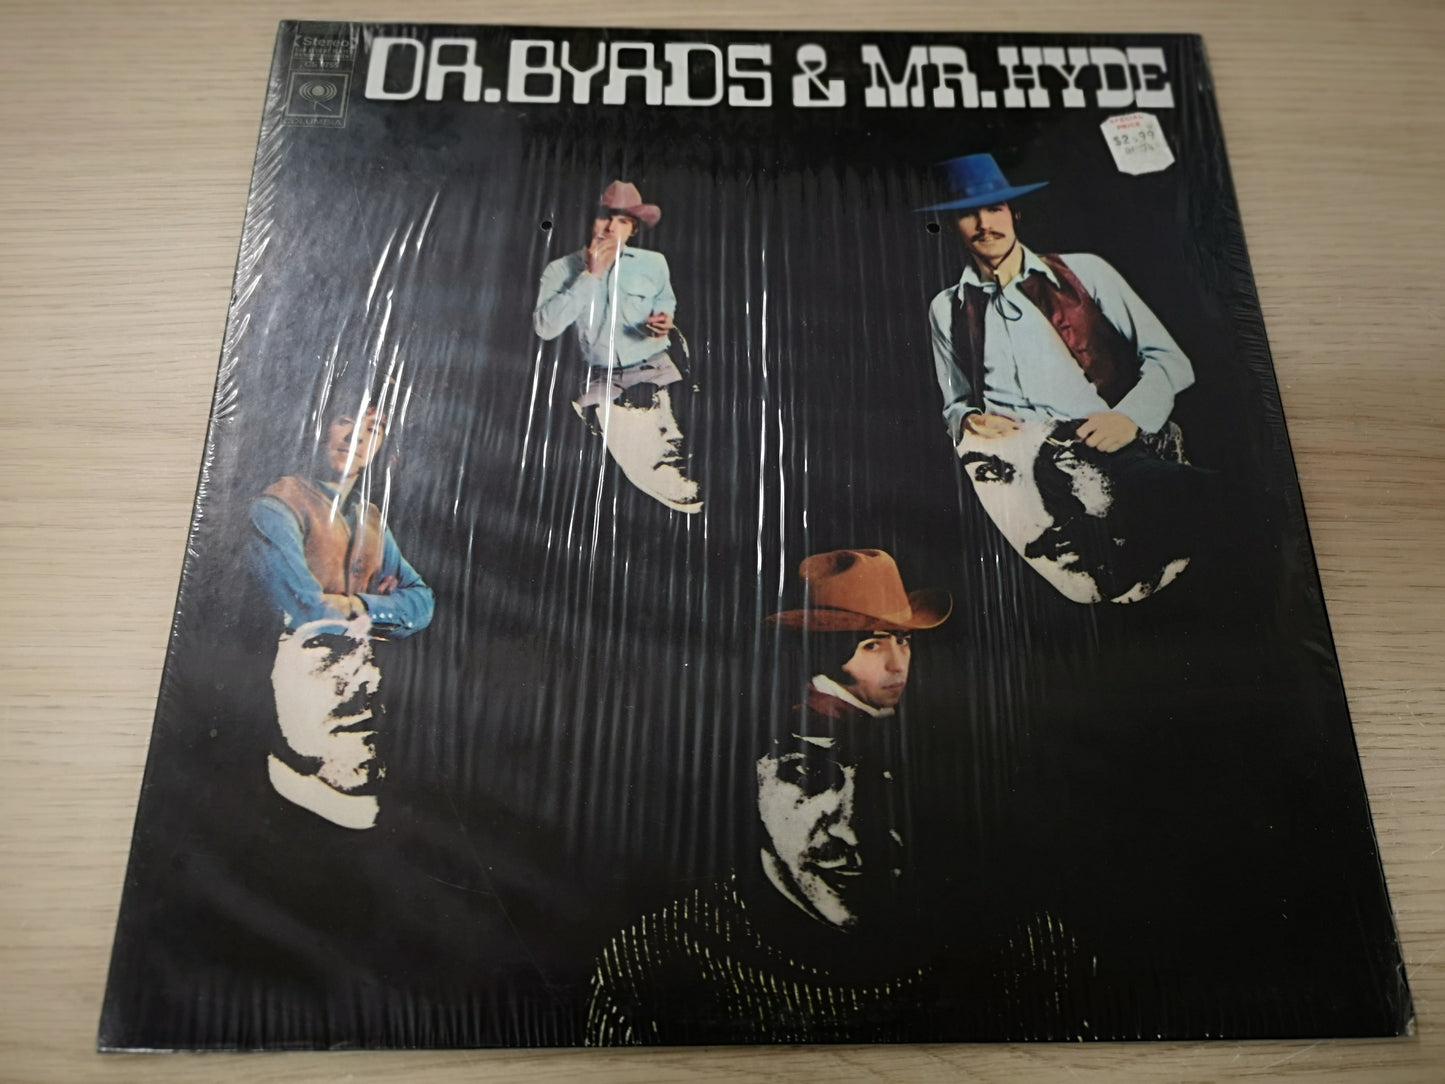 Byrds "Dr. Byrds & Mr. Hyde" Re US 1971 M-/M- (Re of '69 Lp)